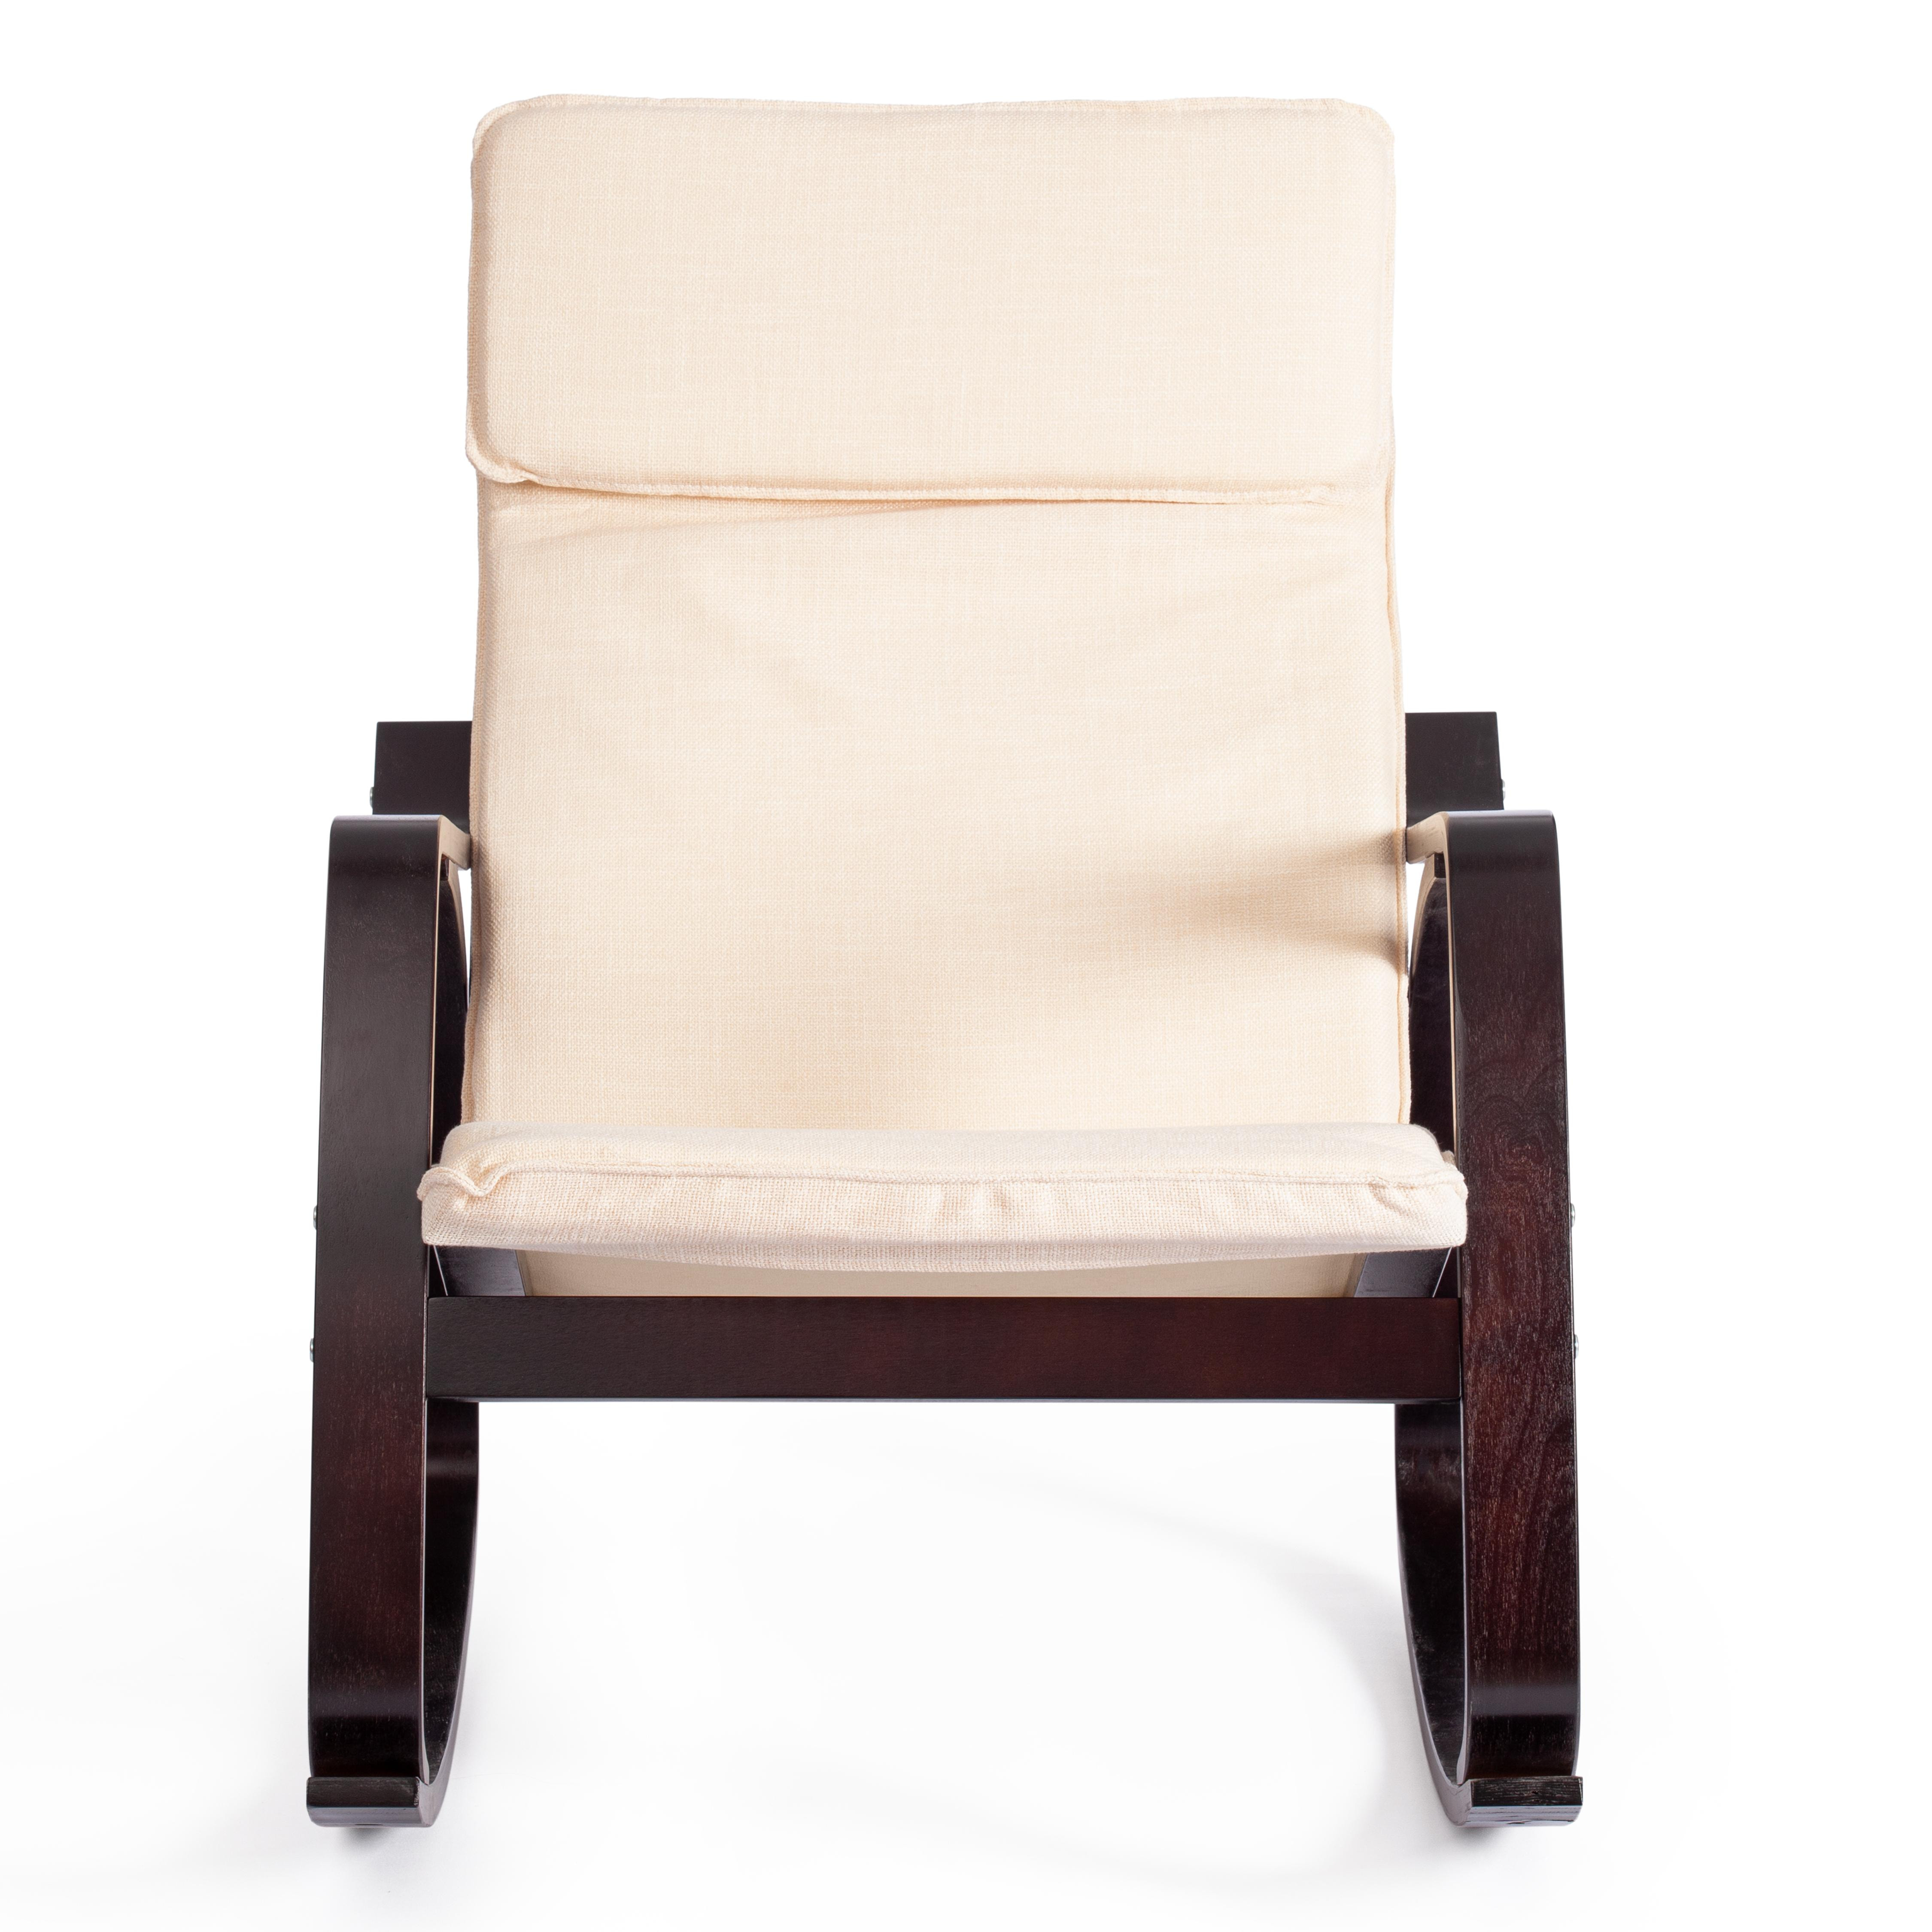 Кресло-качалка mod. AX3005 дерево береза, ткань: полиэстер/хлопок, 61х94,5х104 см, дерево: венге #9, ткань бежевая 1501-4